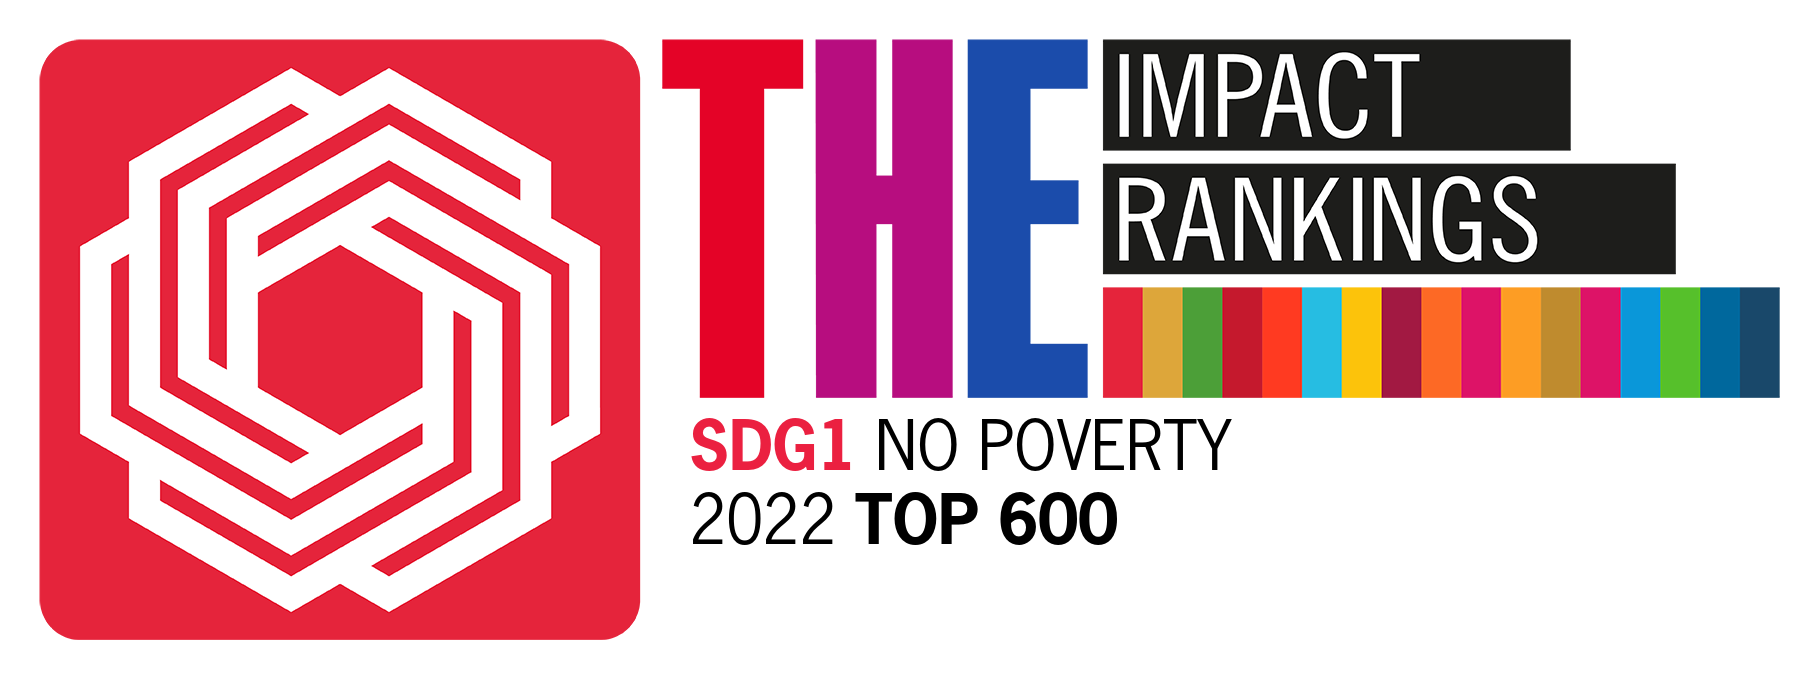 SDG1_ No Poverty - Top 600